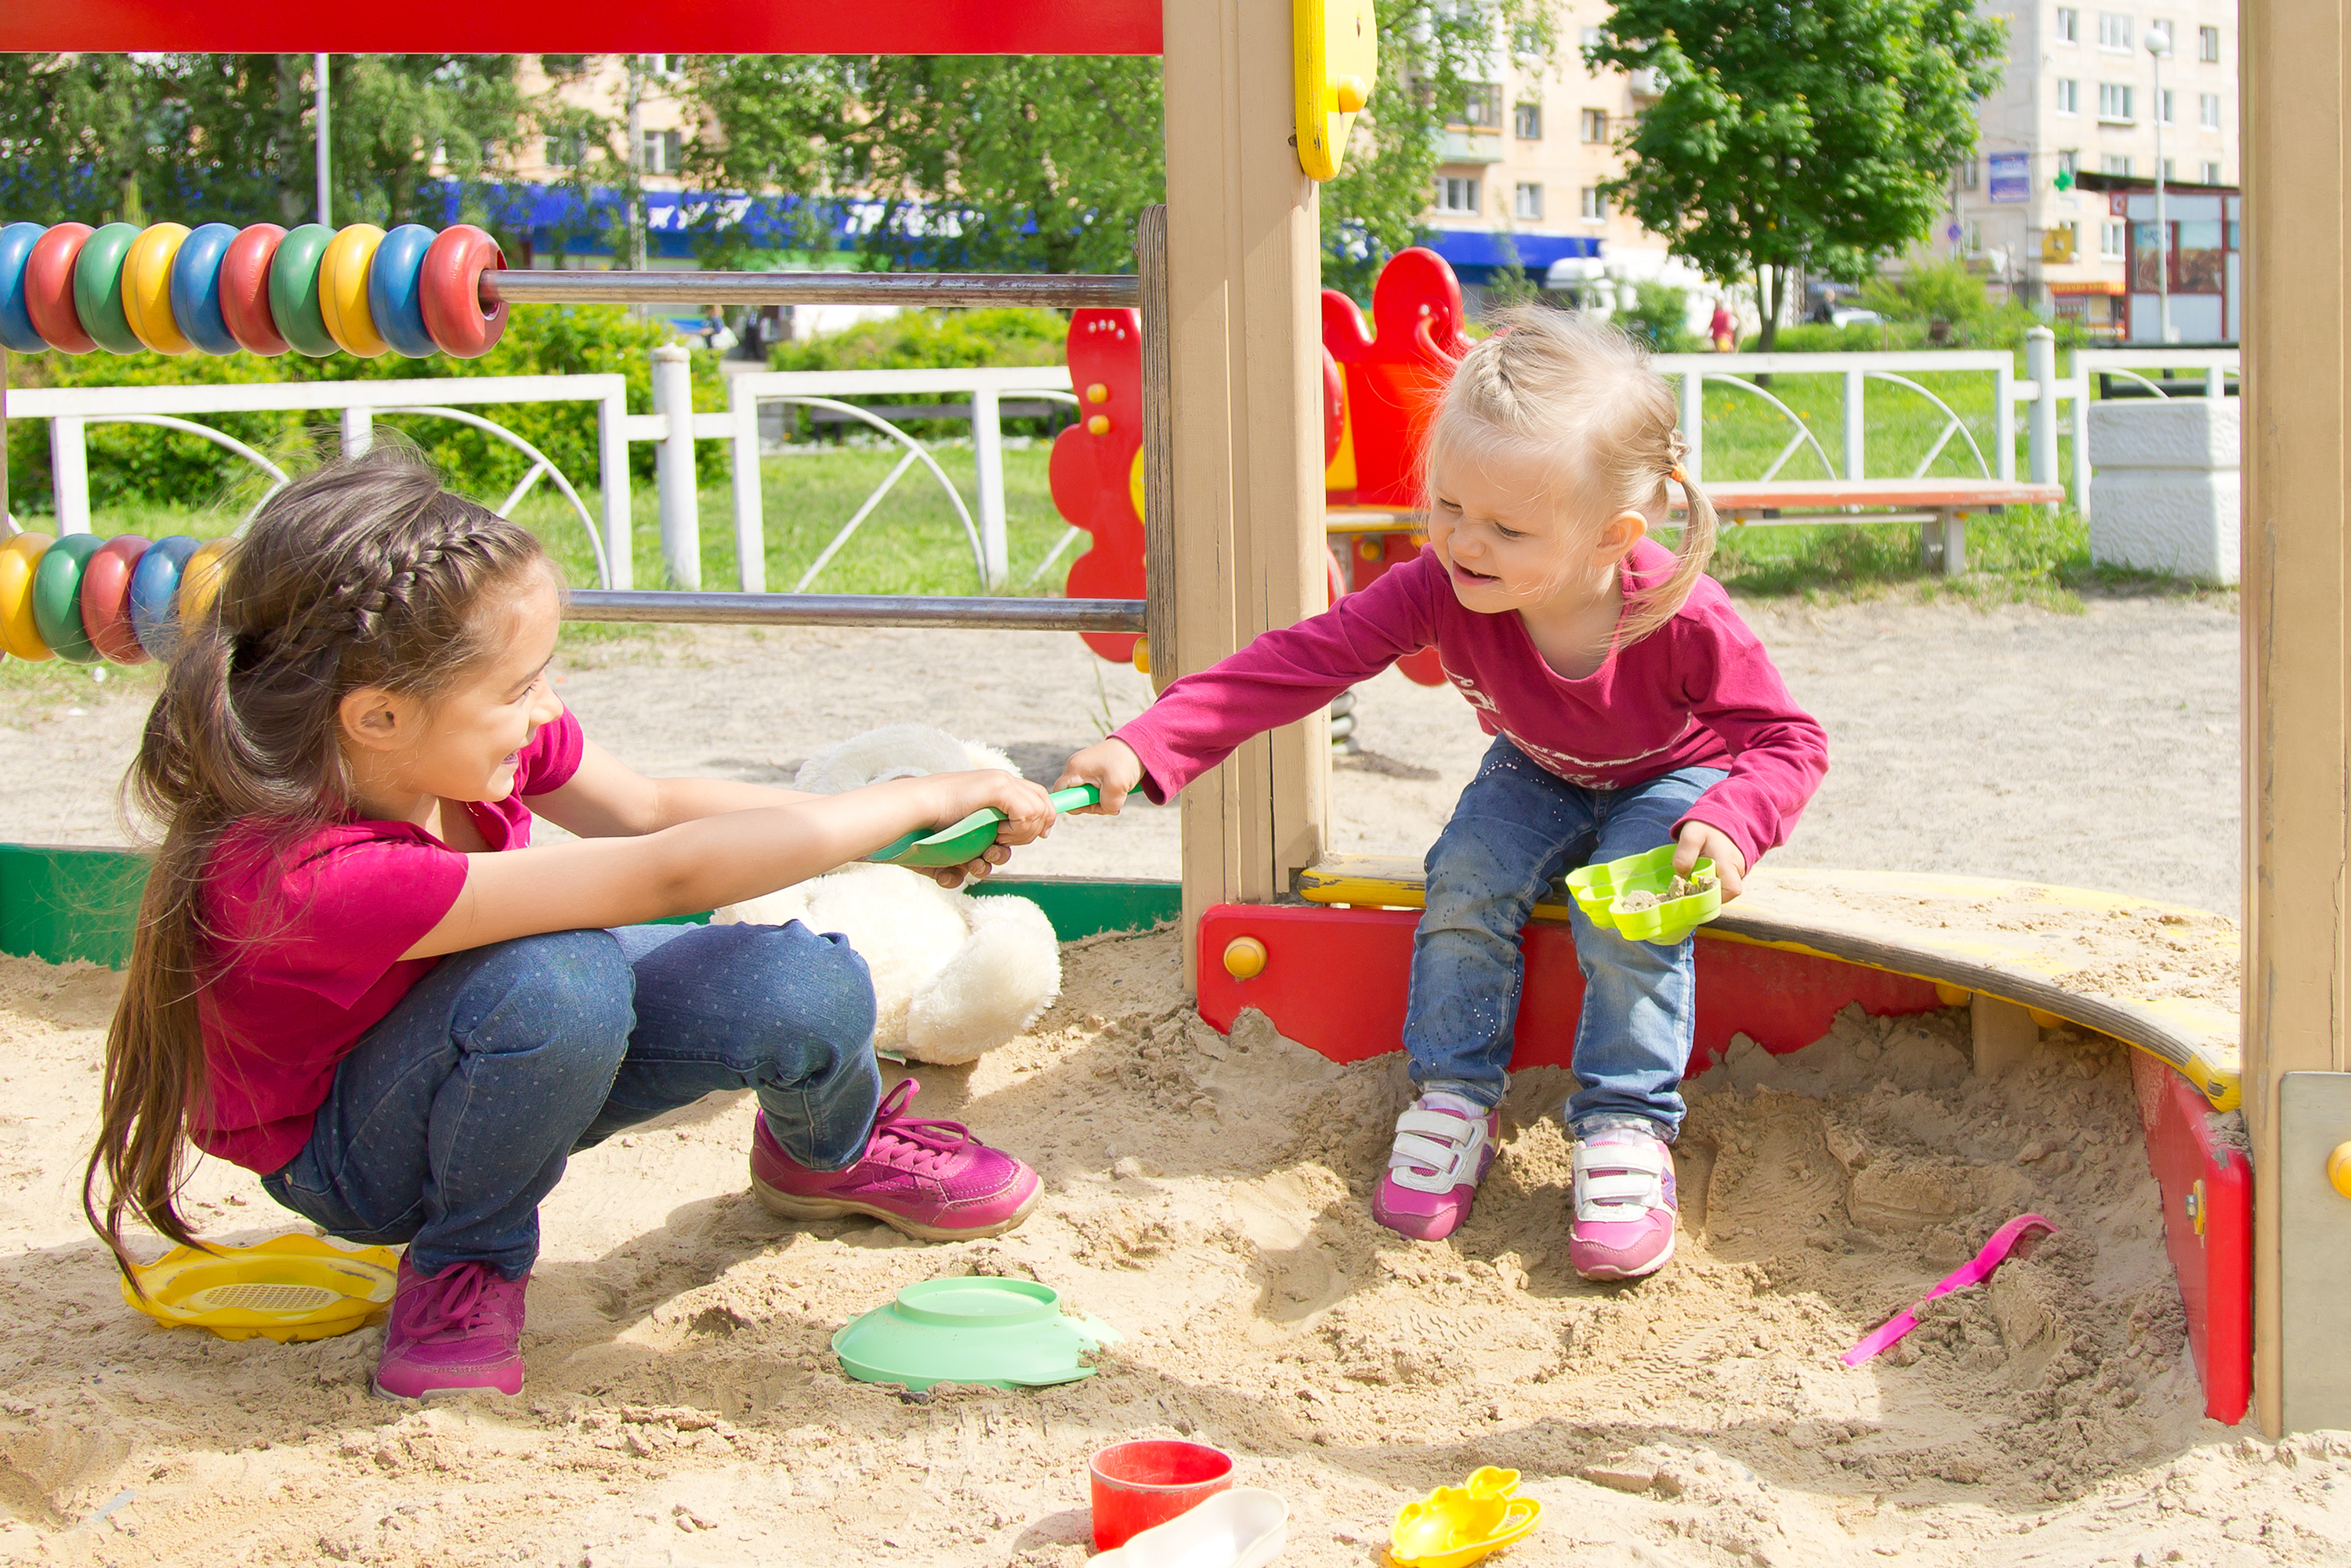 Two girls fighting in a sandbox